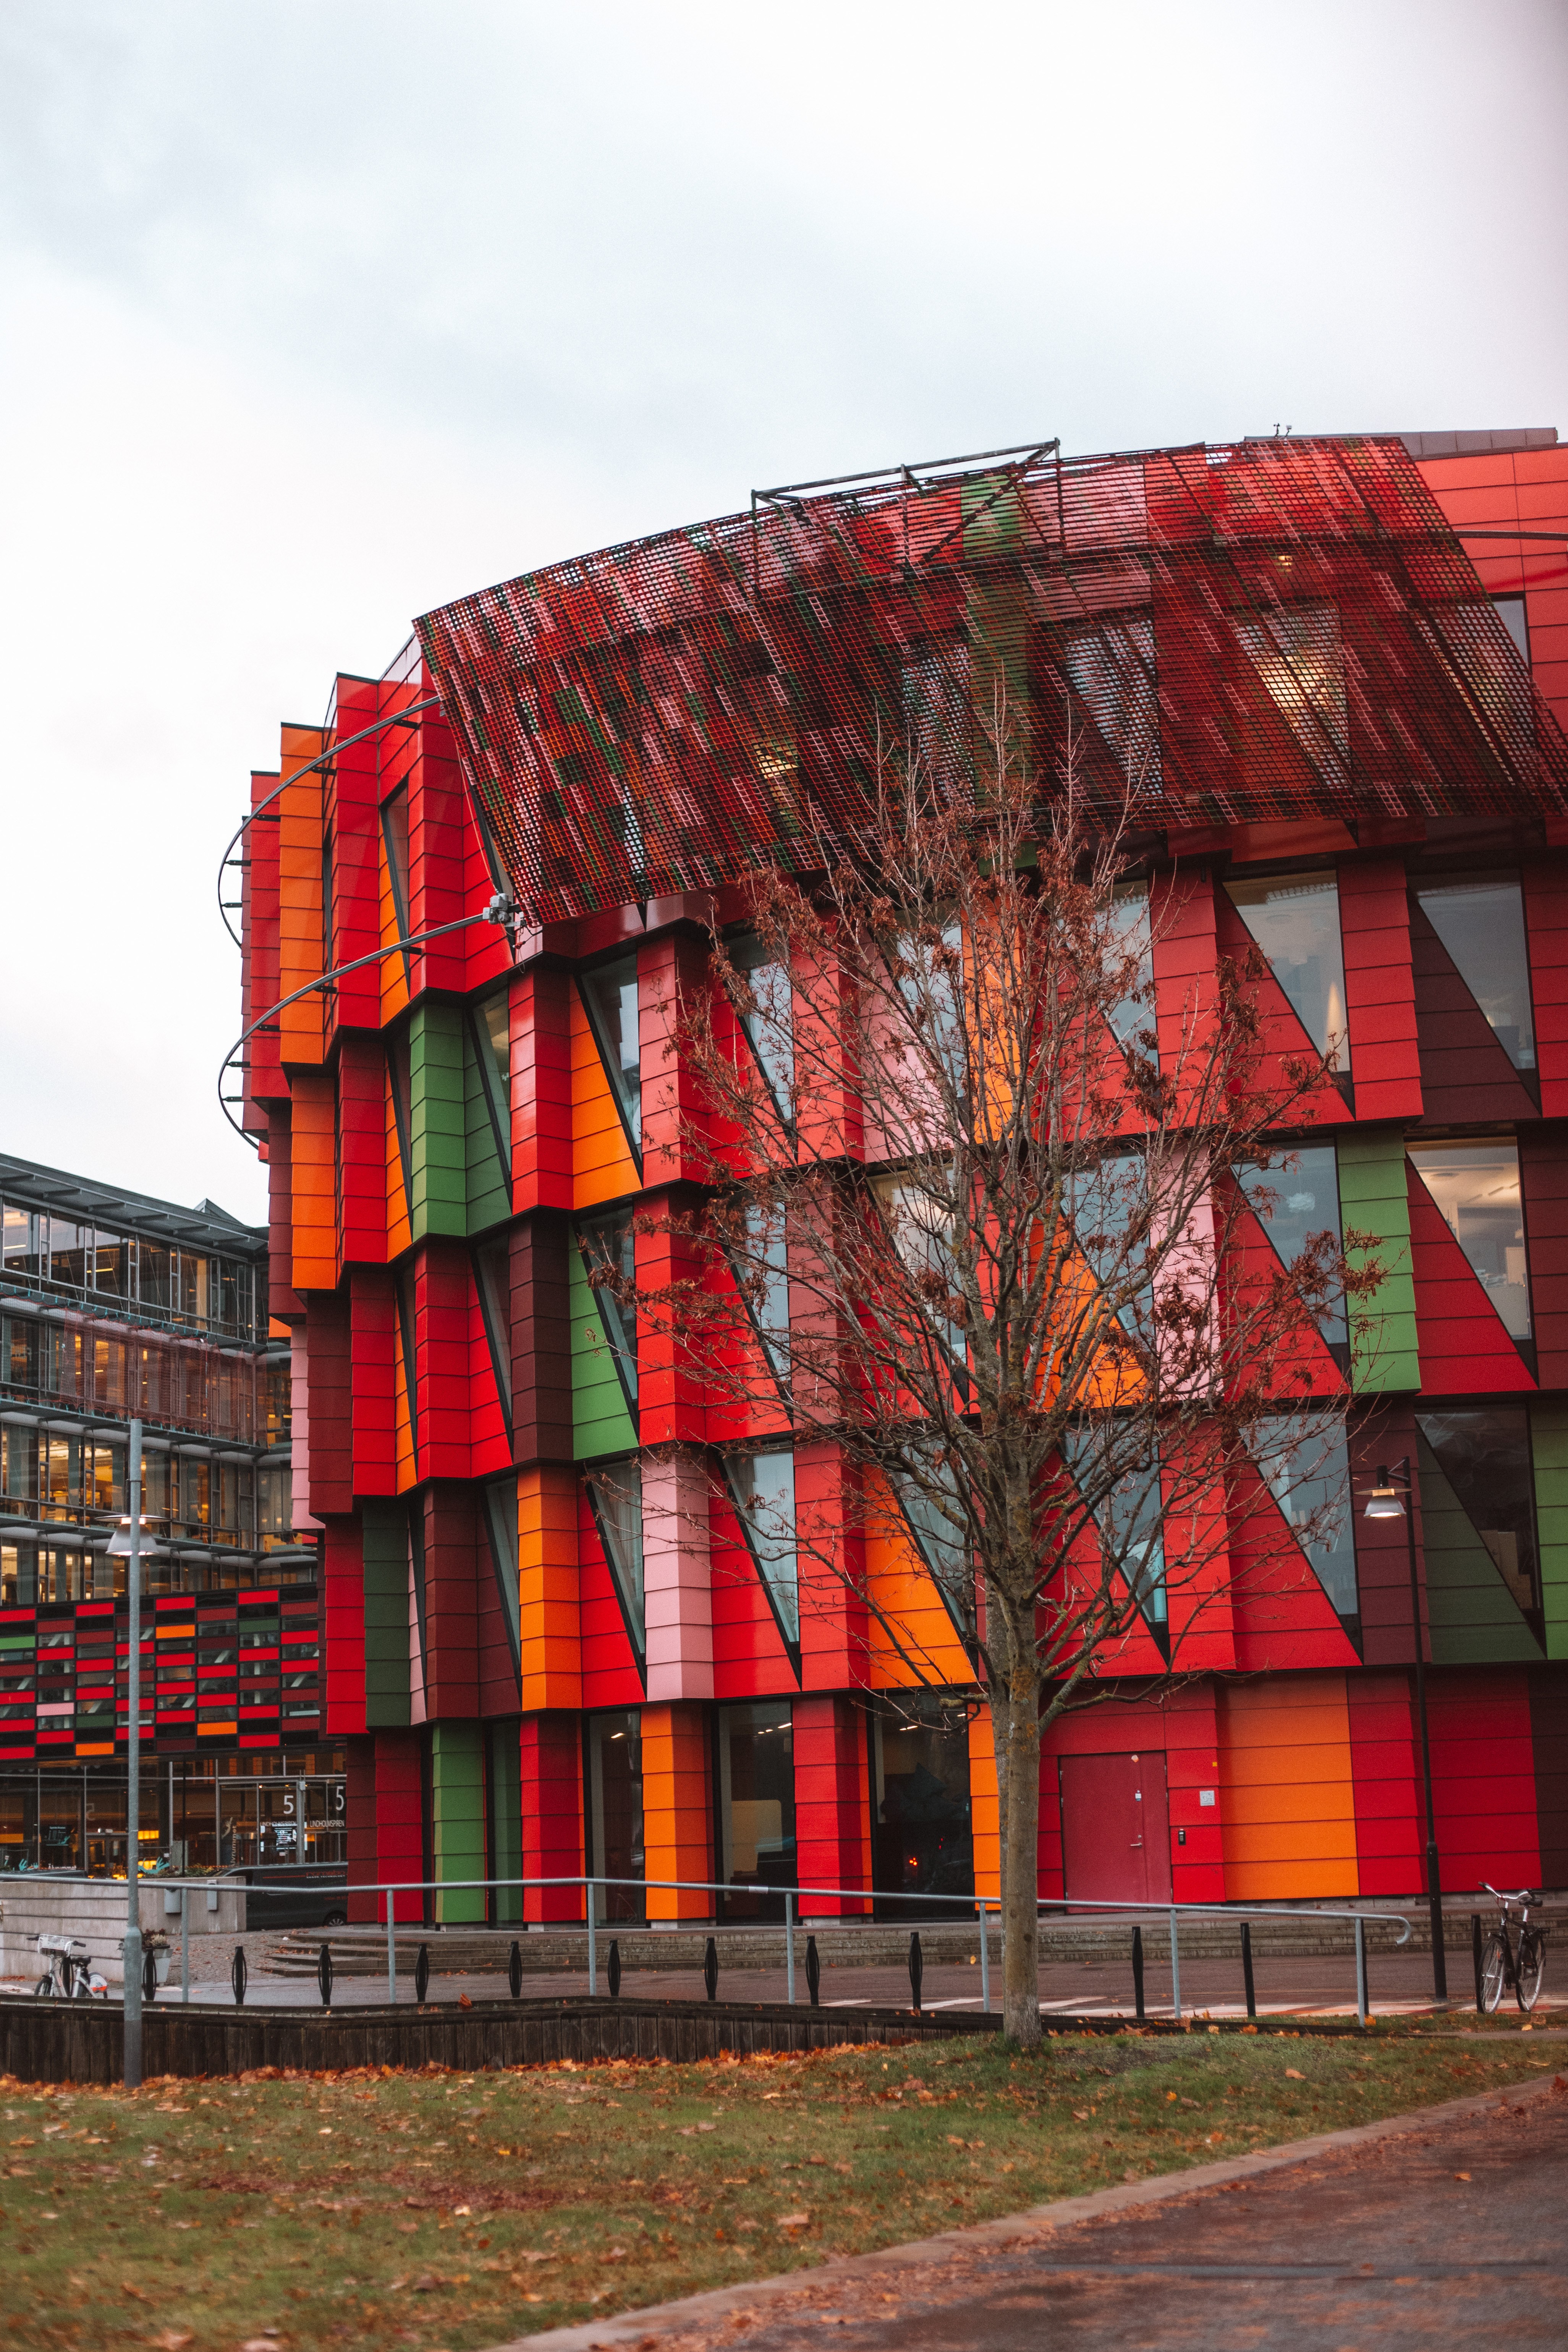 Kuggen building on Lindholmen - red, orange and green circular architecture